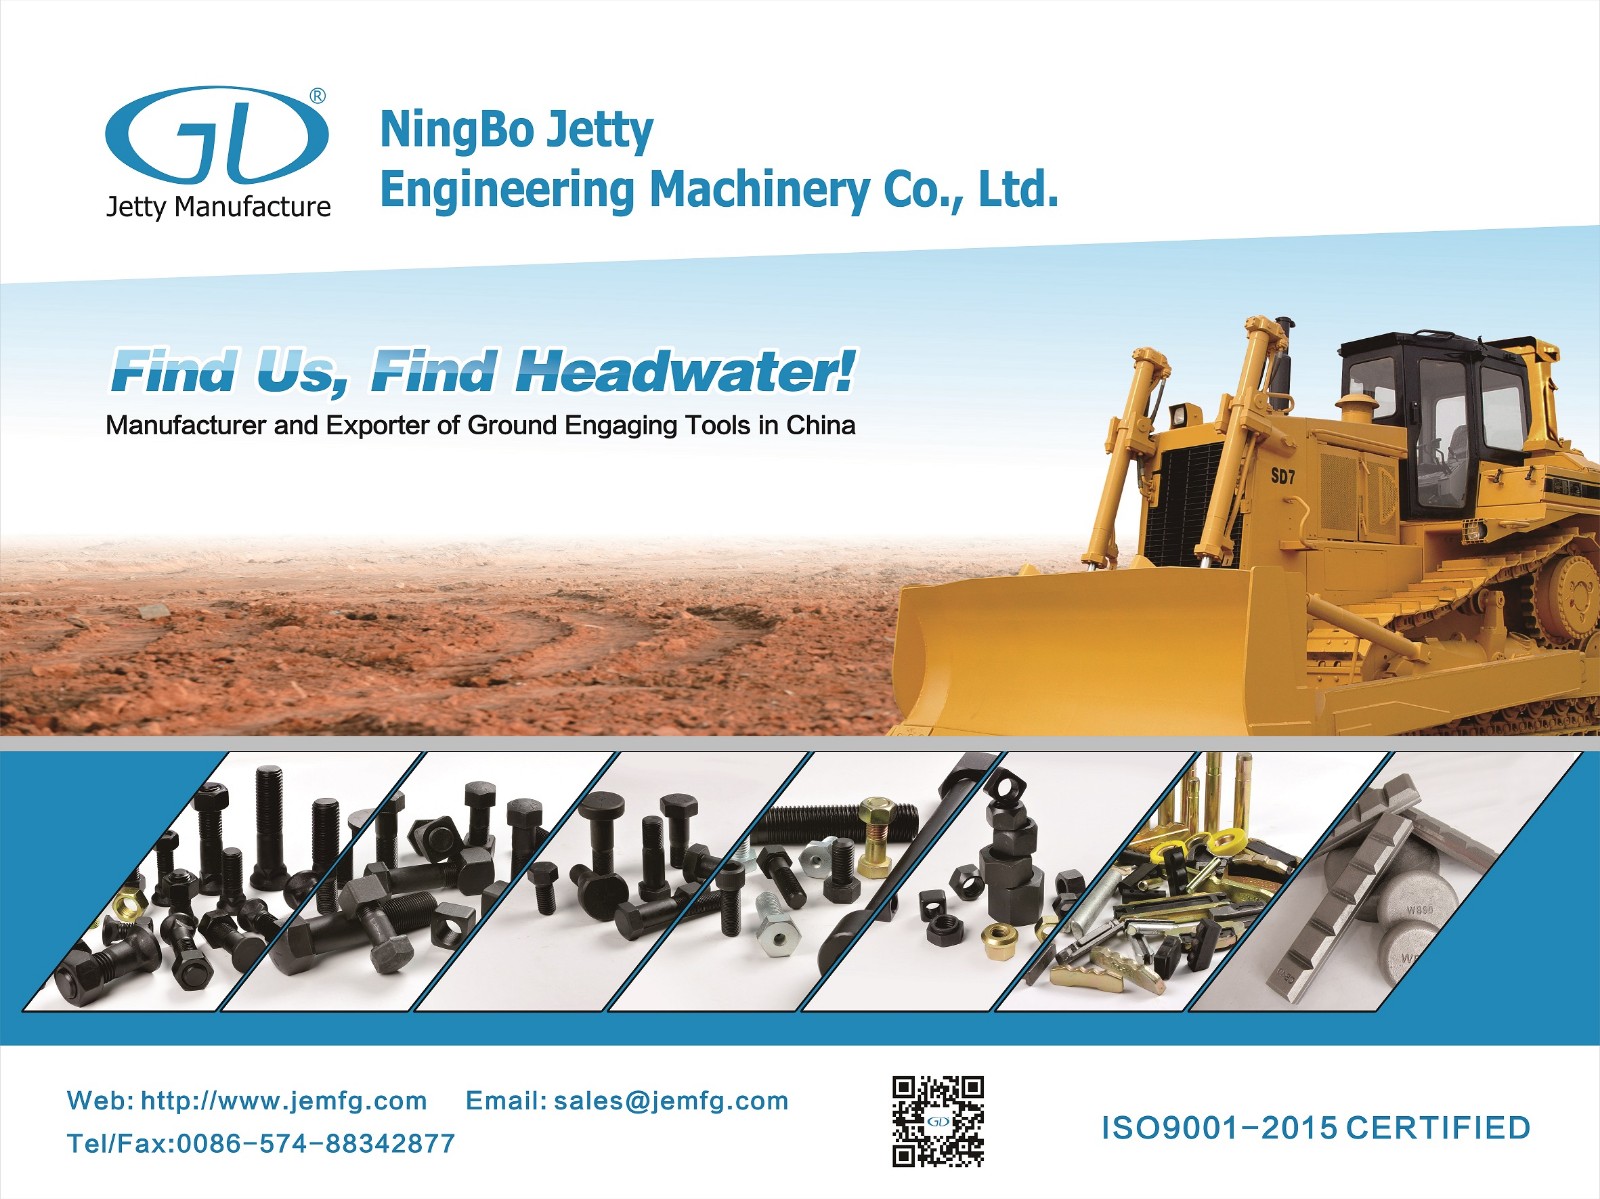 Ningbo Jetty Engineering Machinery Co., Ltd